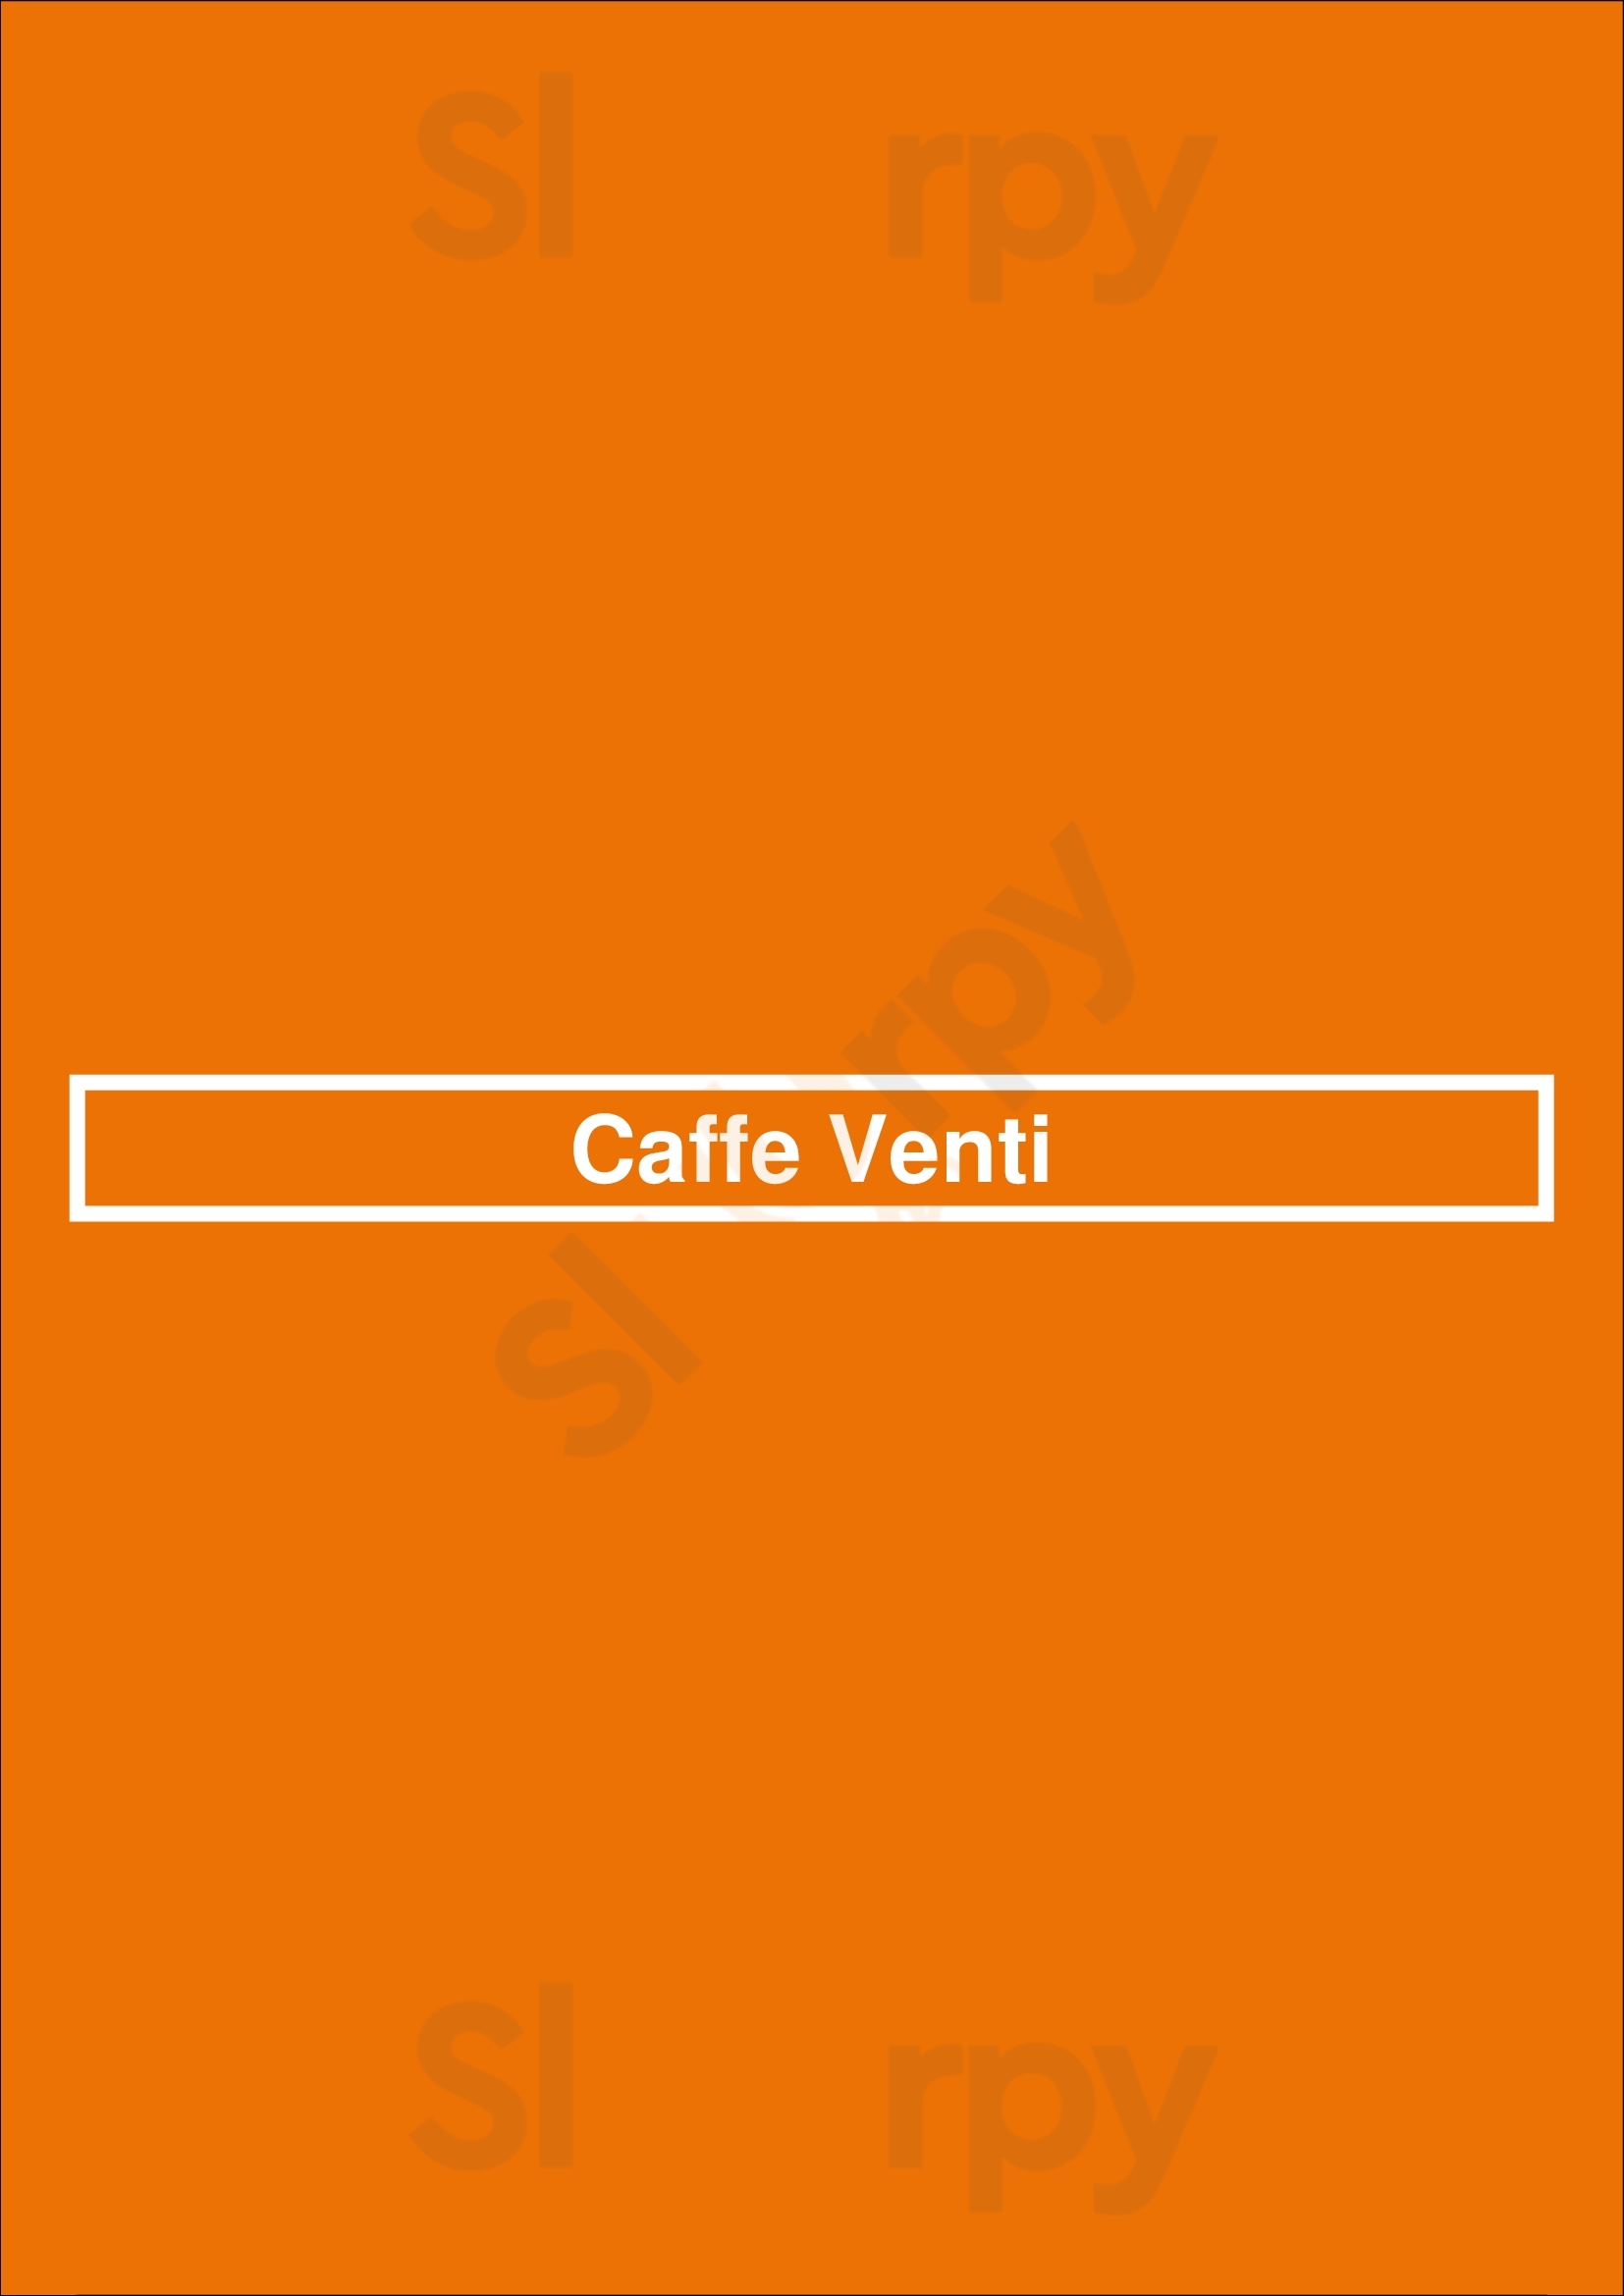 Caffe Venti Sydney Menu - 1